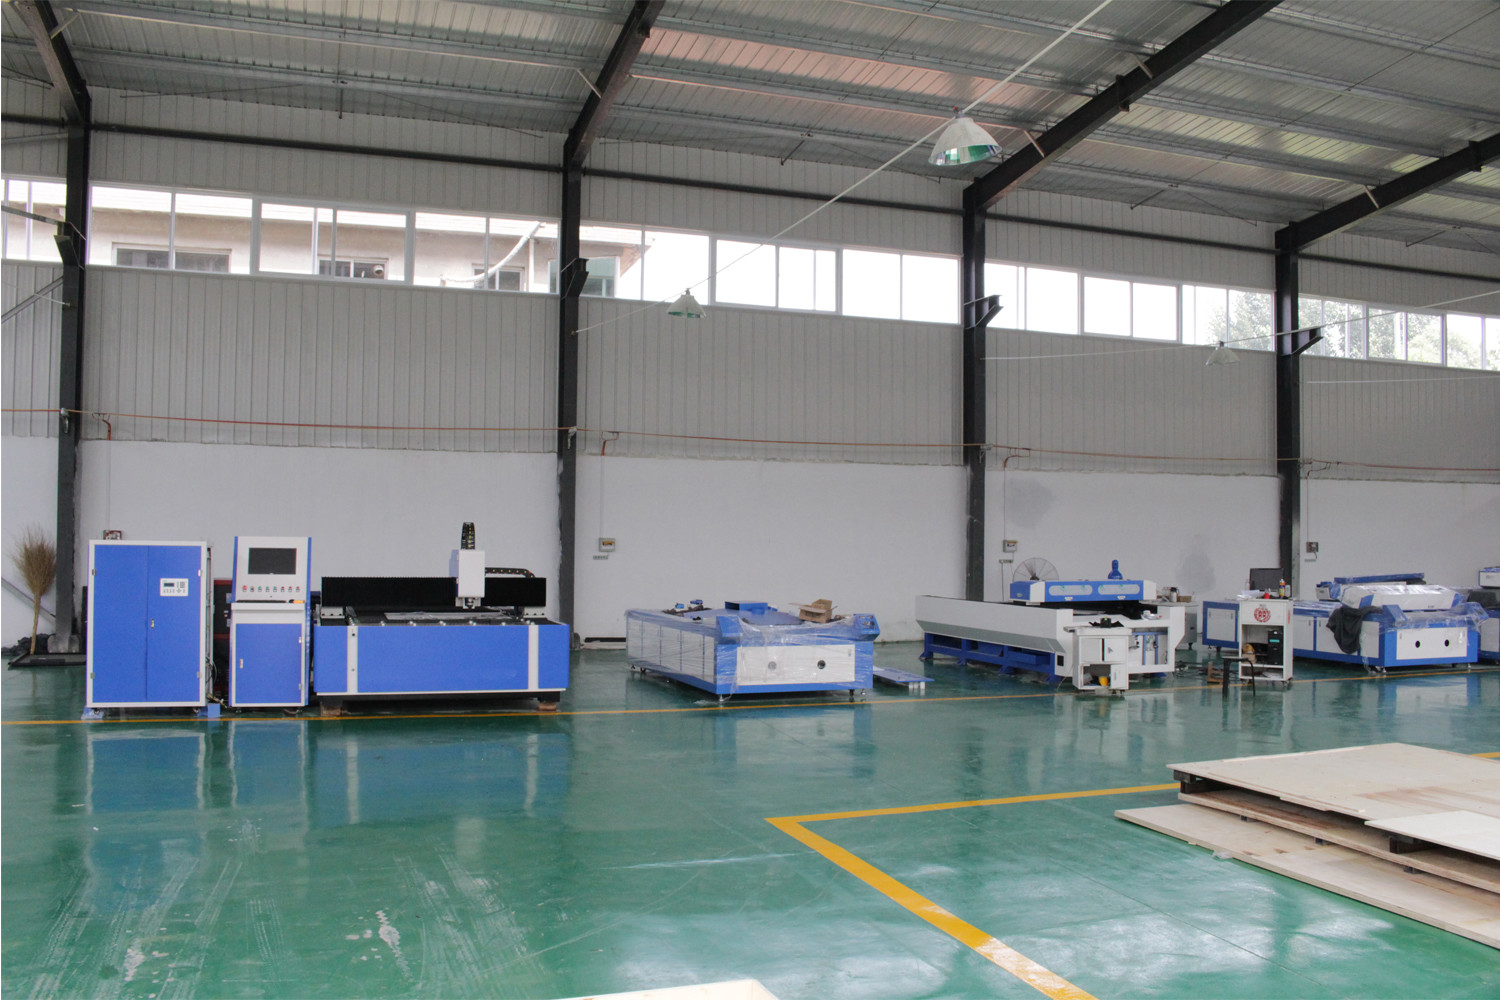 Jinan Upgoal Mechanical Equipment Co.,Ltd